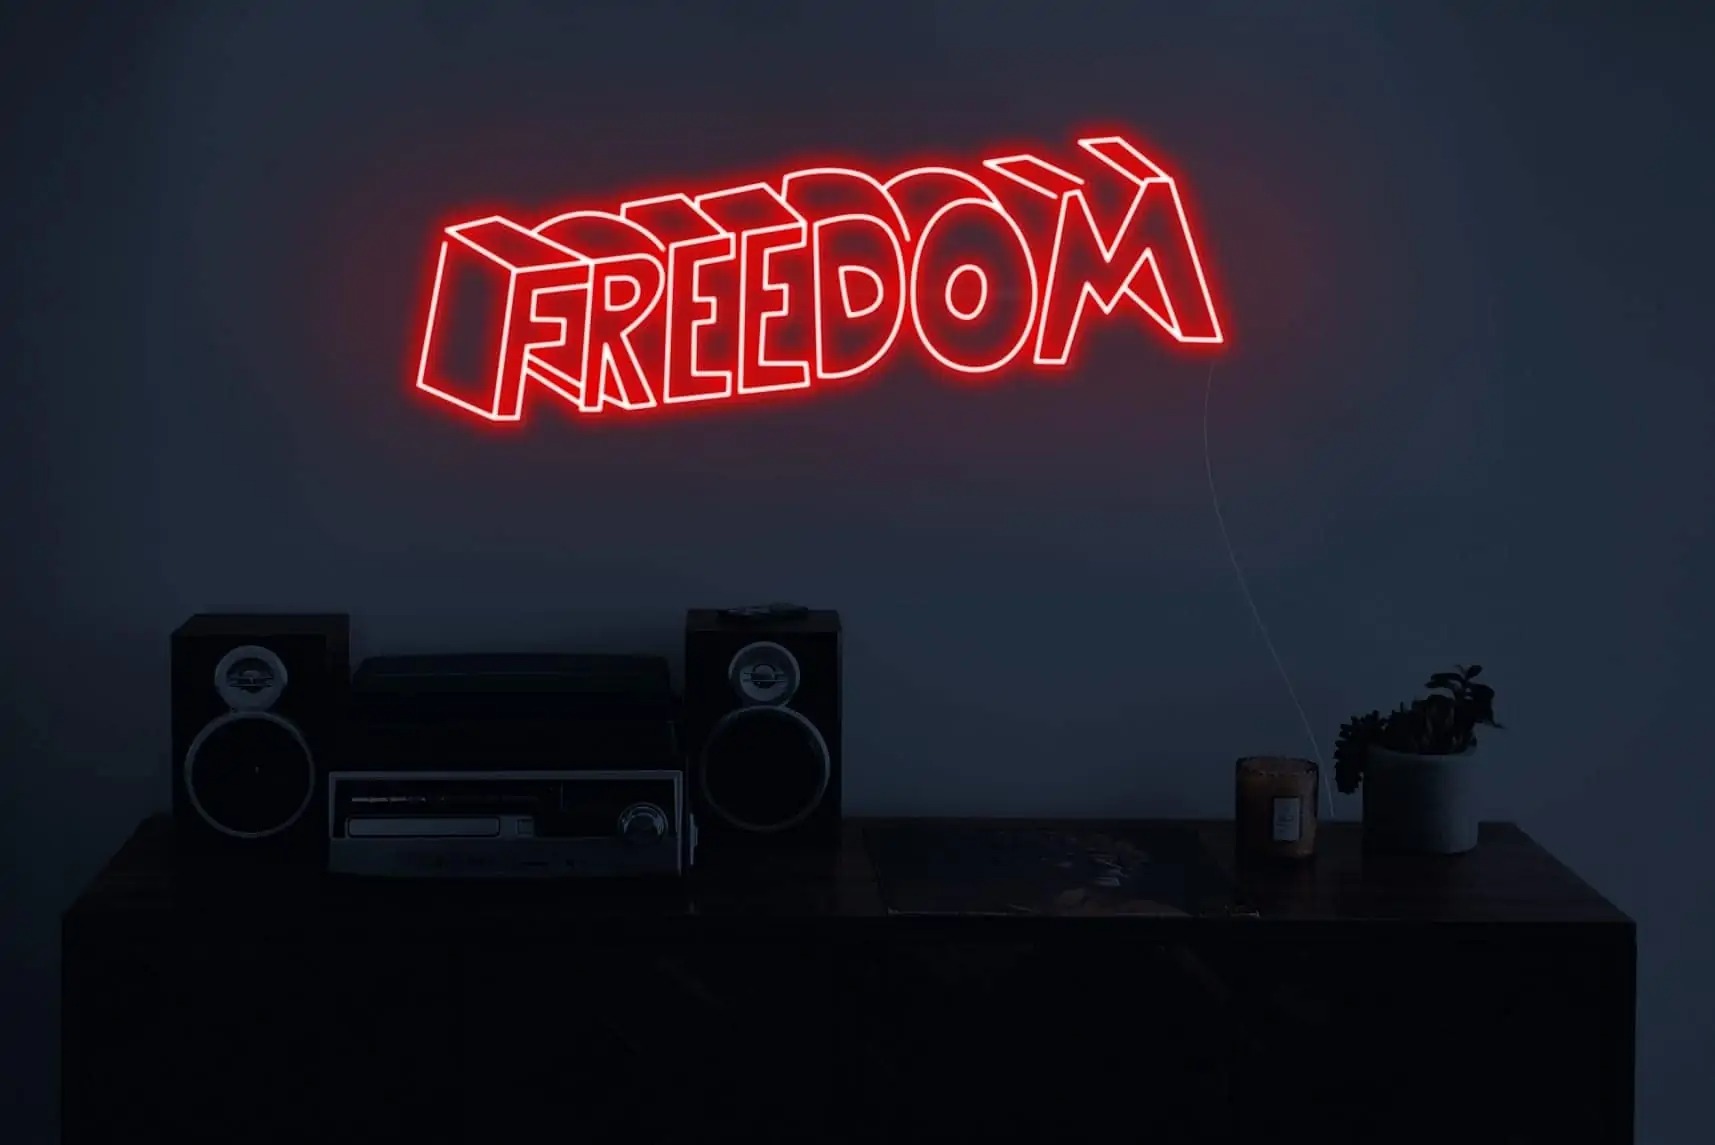 FREEDOM Neon Sign